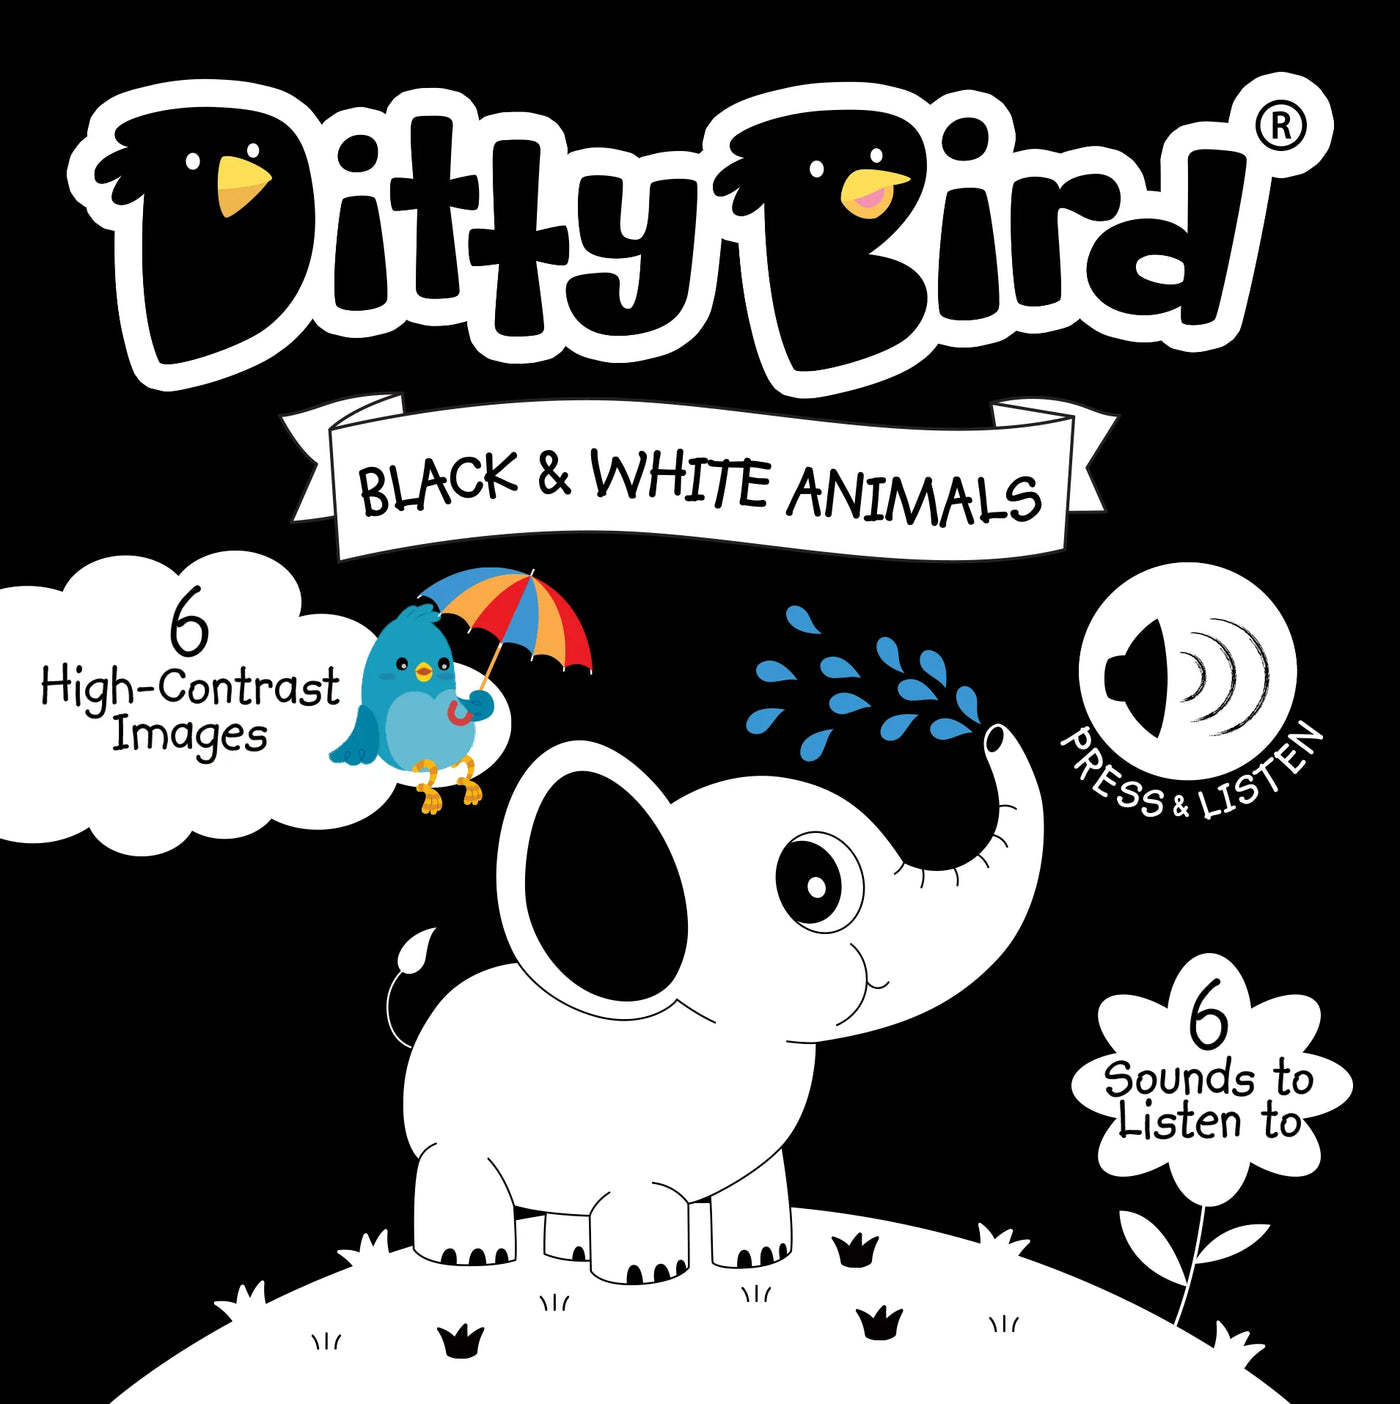 Ditty Bird - Black and White Animals